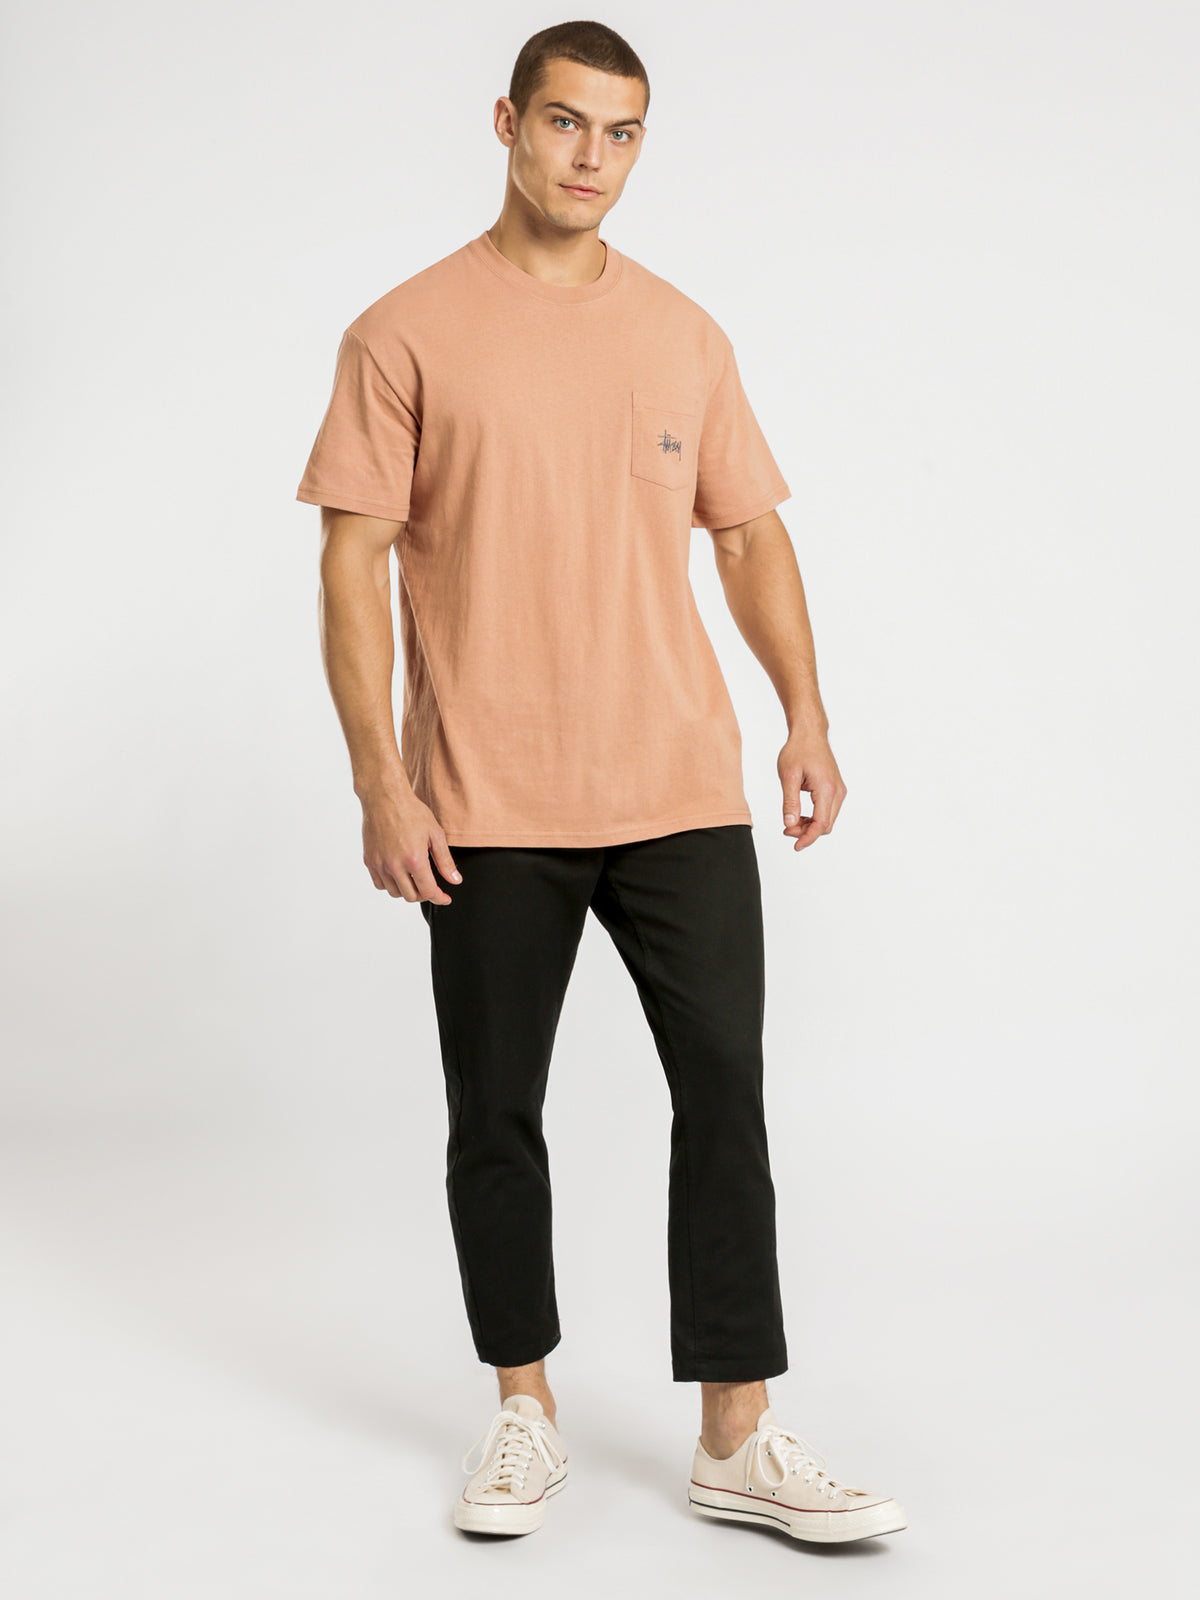 Graffiti Pocket Short Sleeve T-Shirt in Coral